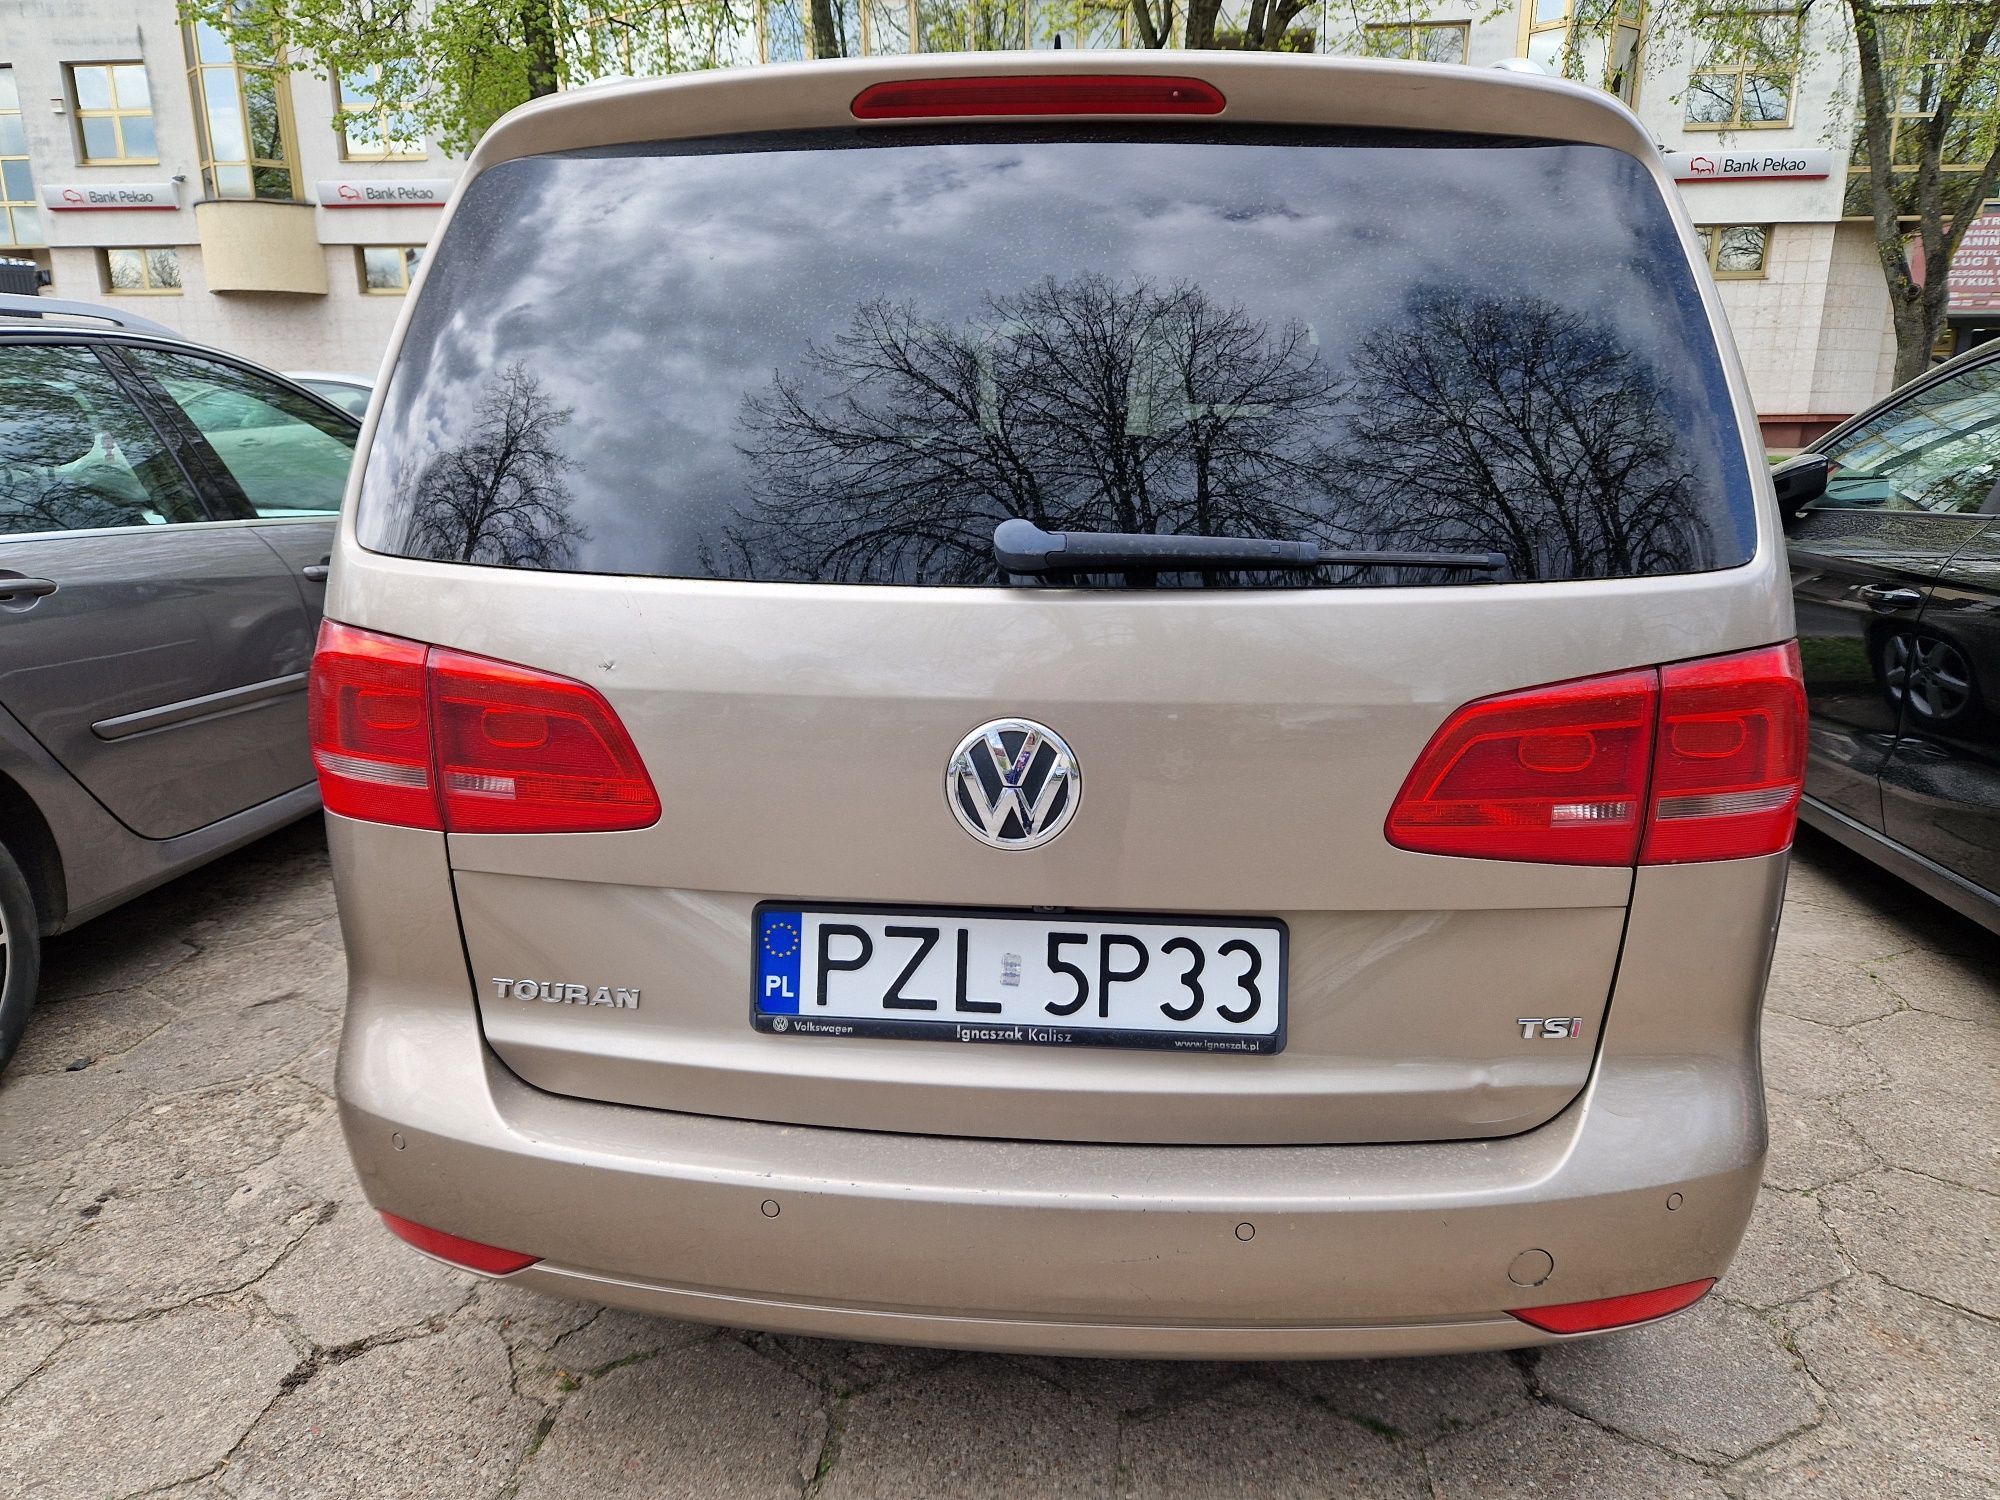 Volkswagen Touran, serwisowany, jeden właściciel.